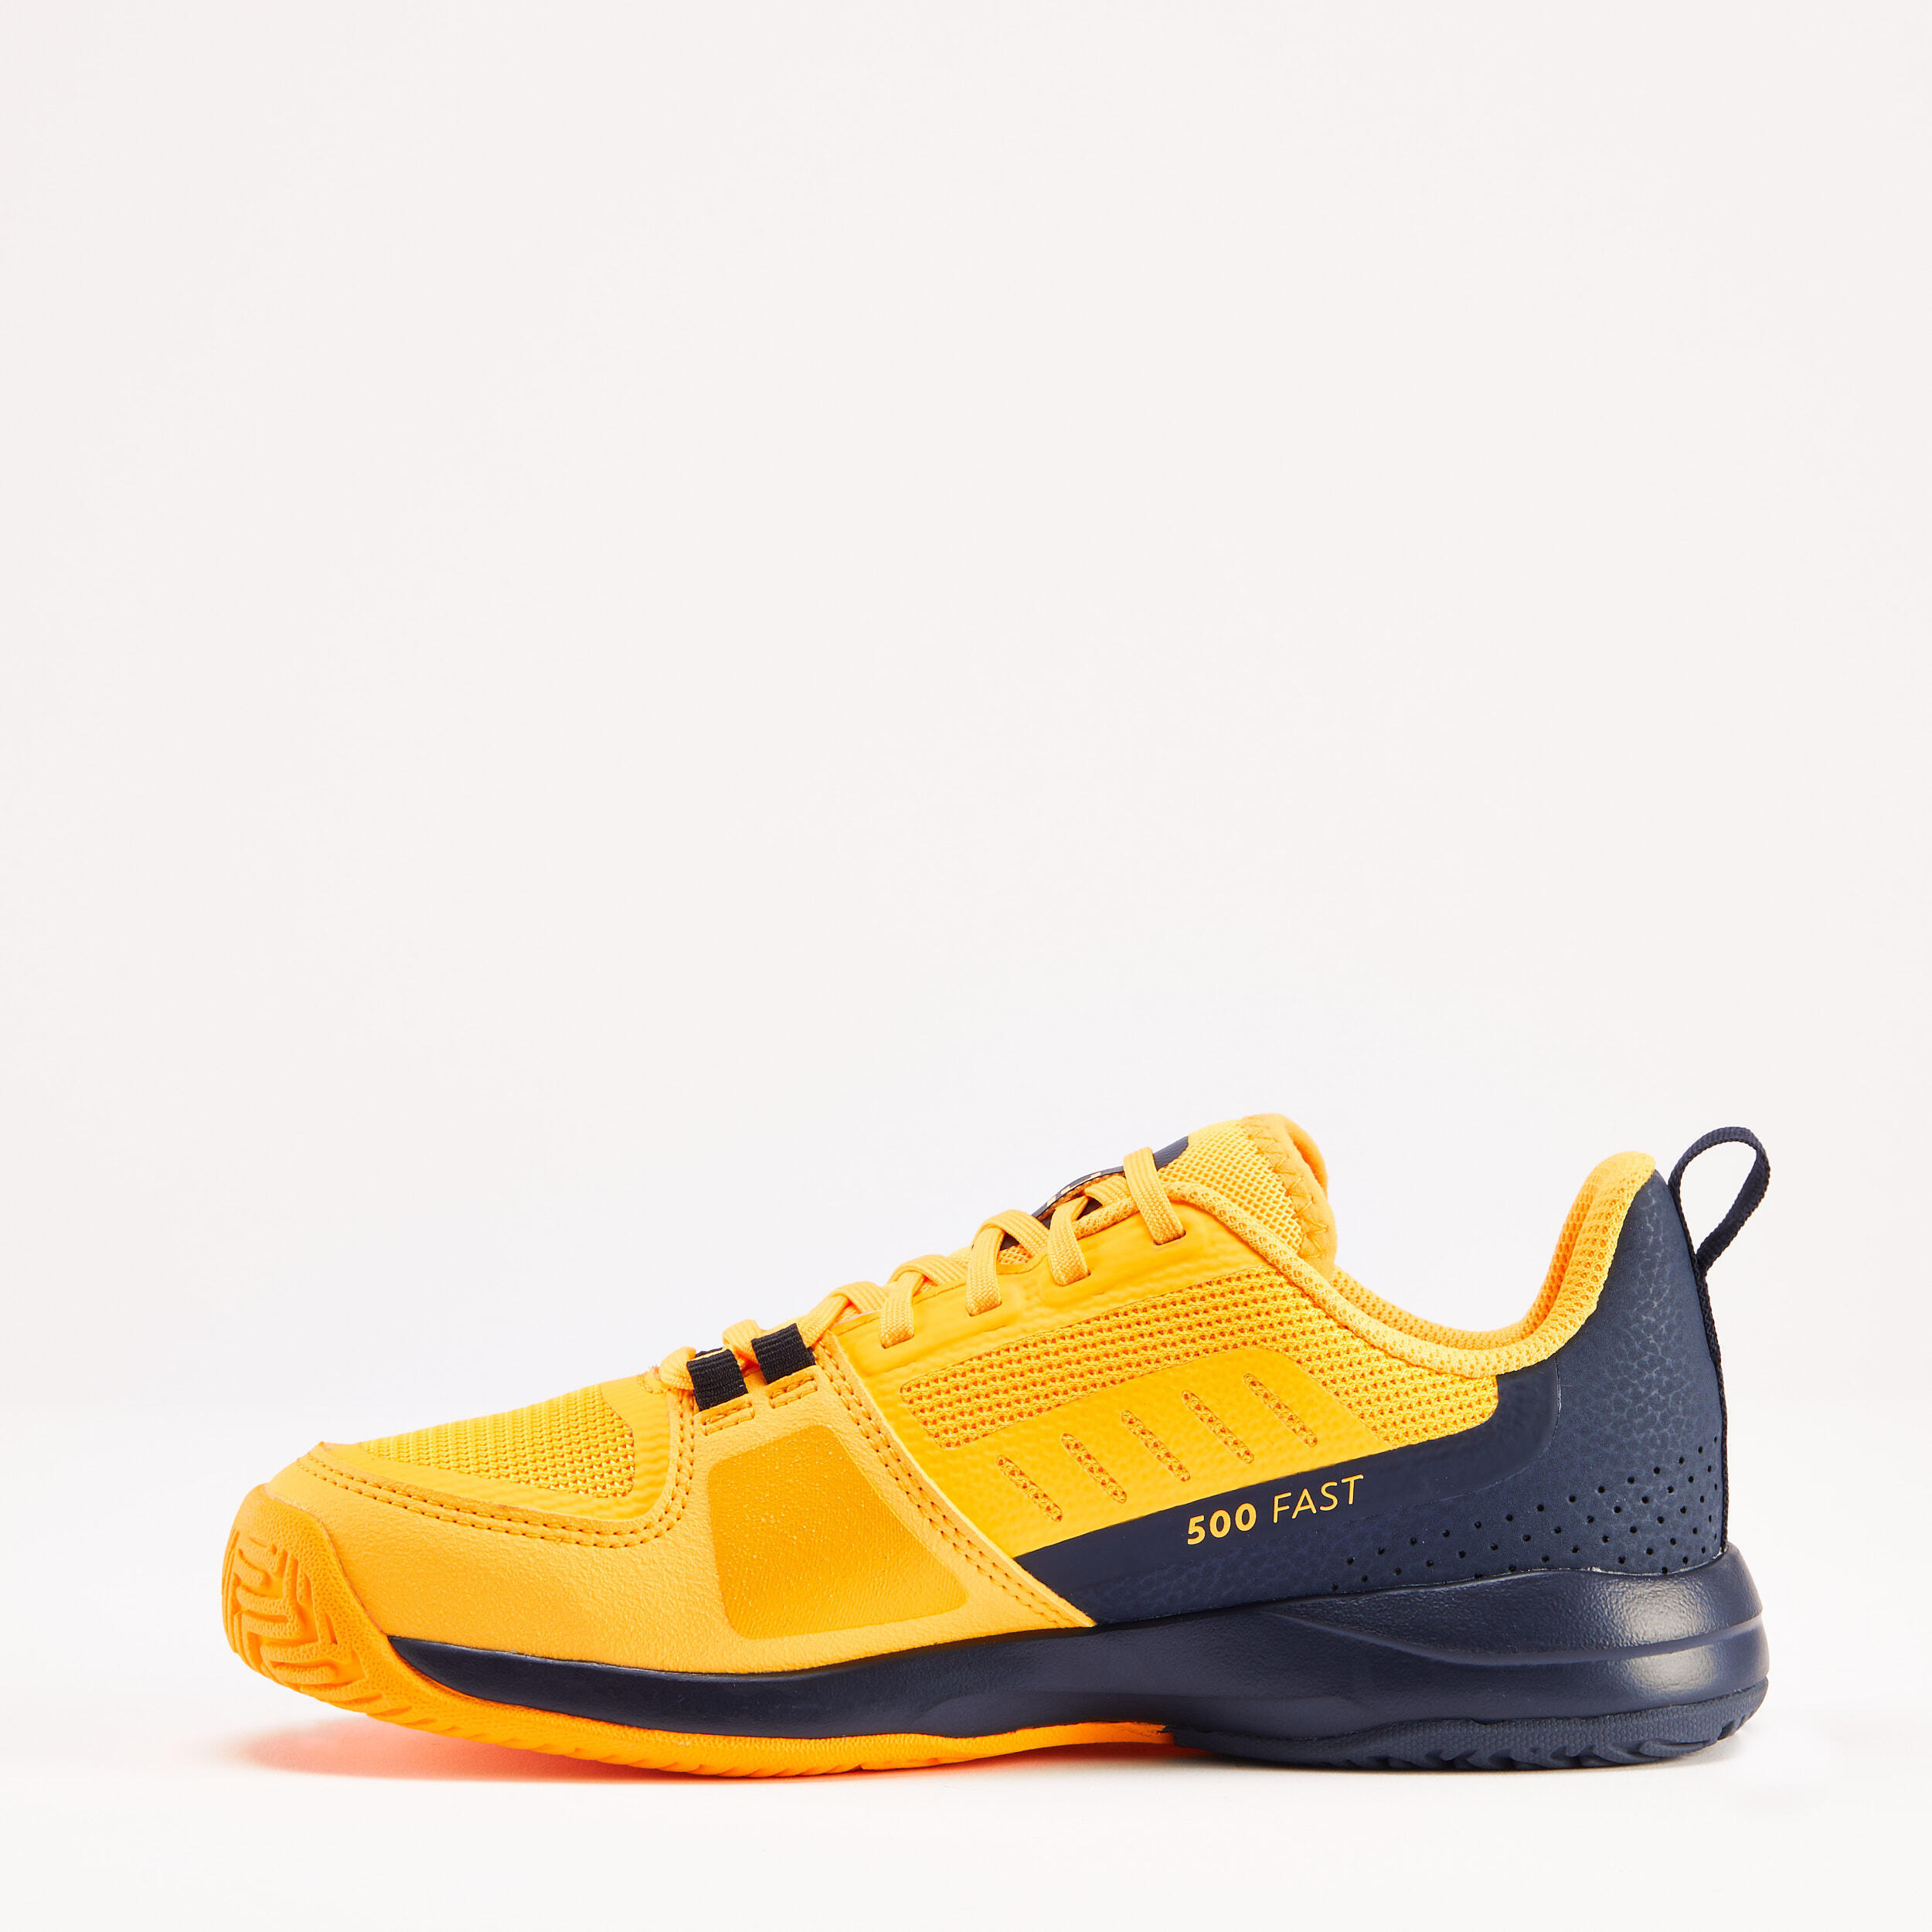 Kids' Lace-Up Tennis Shoes TS500 Fast JR - Sunfire 3/9